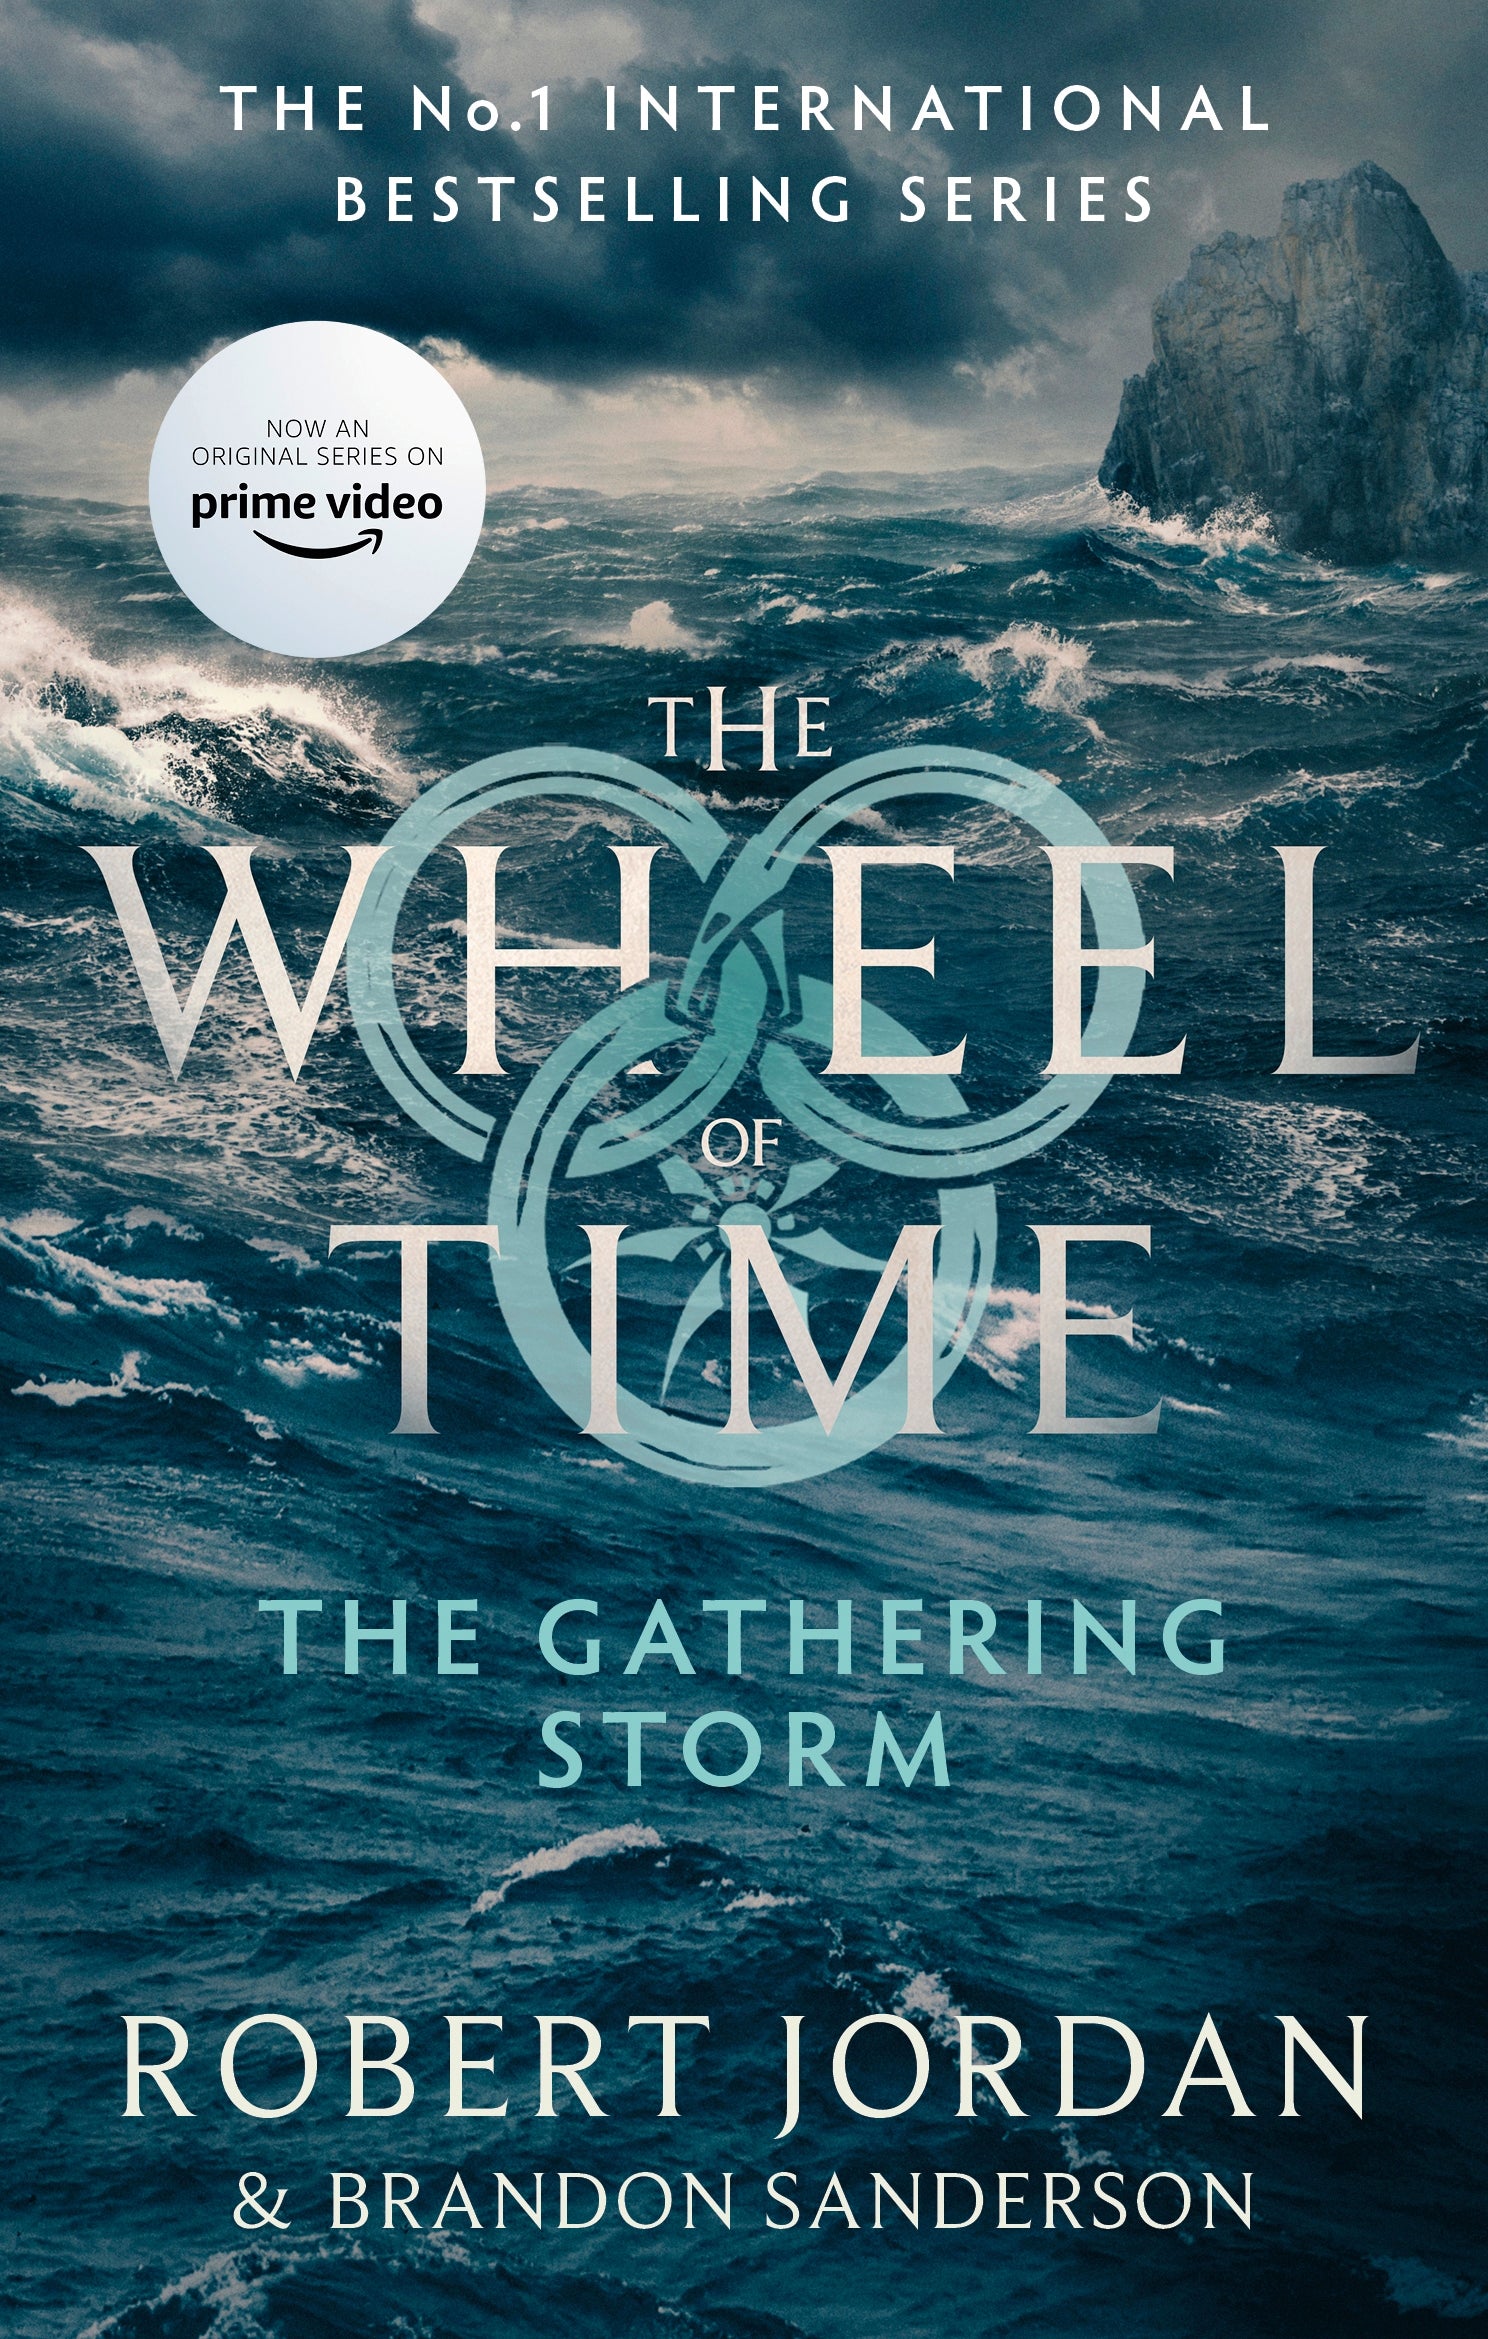 The Gathering Storm by Robert Jordan, Brandon Sanderson